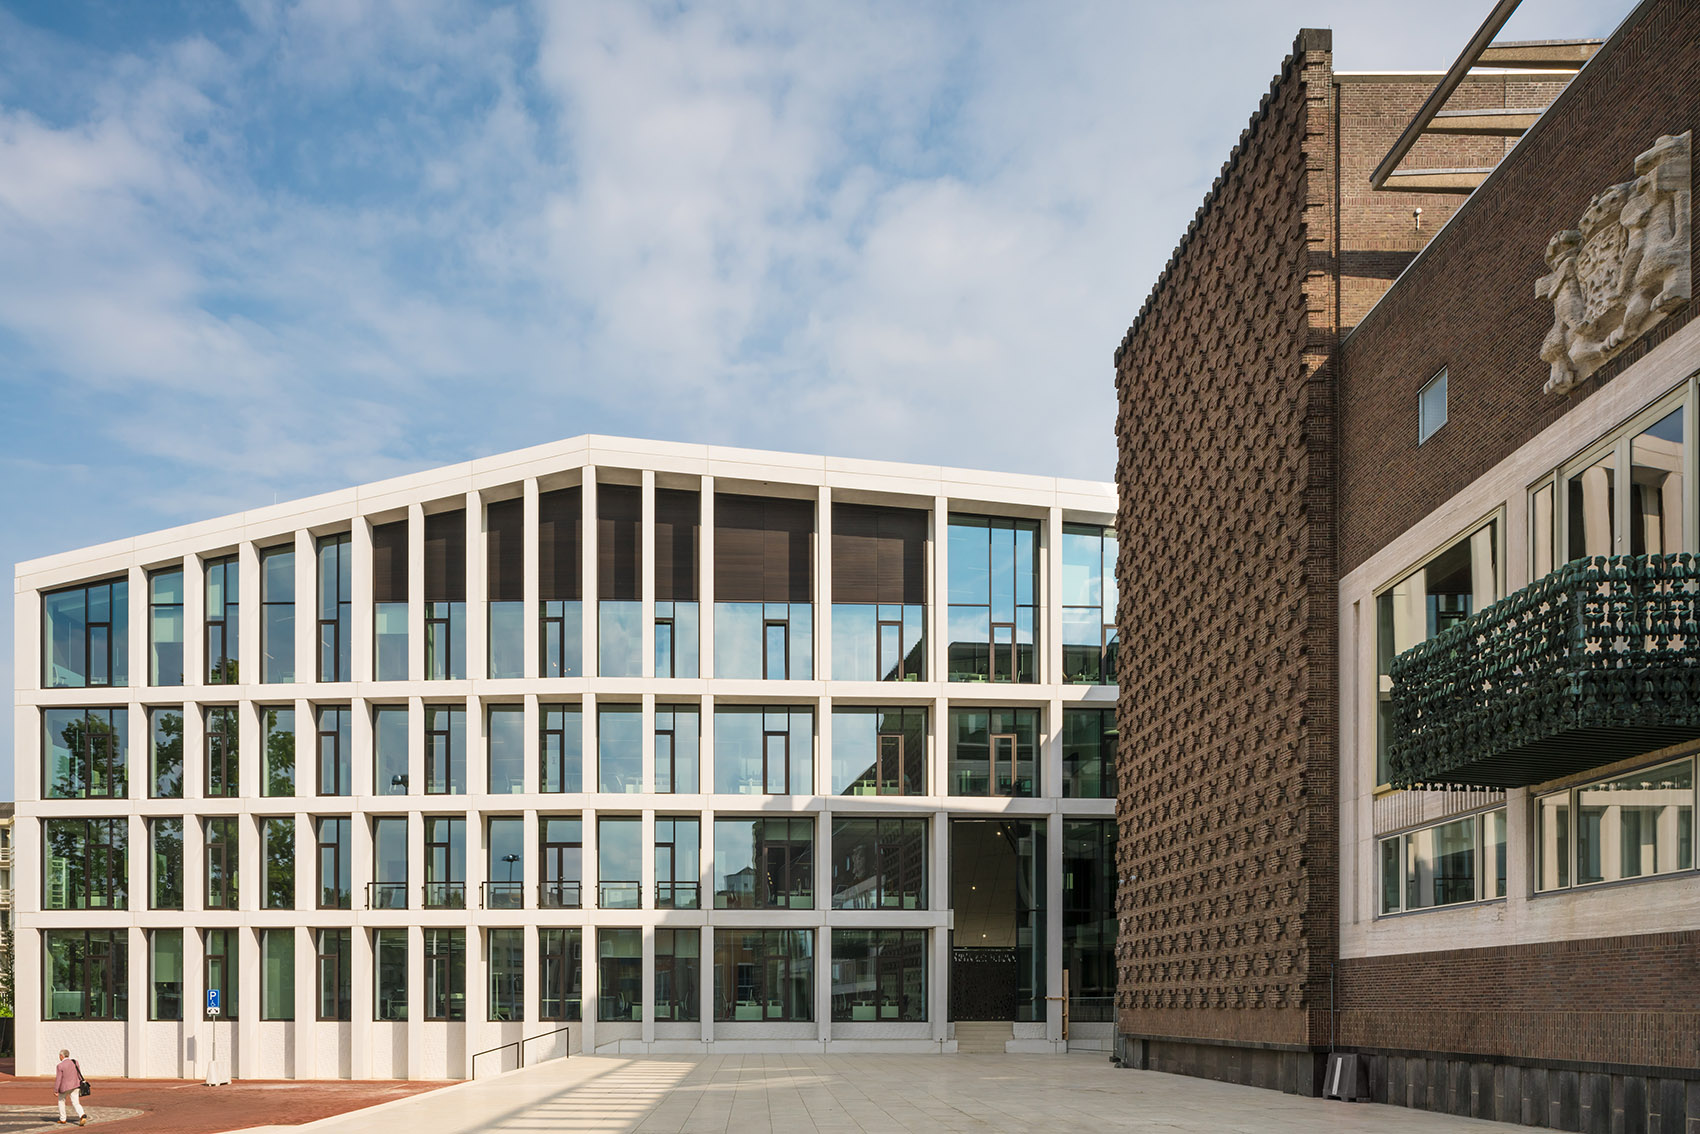 Gelderland省政厅，荷兰/新与旧，历史与创意、厚重与轻盈-60